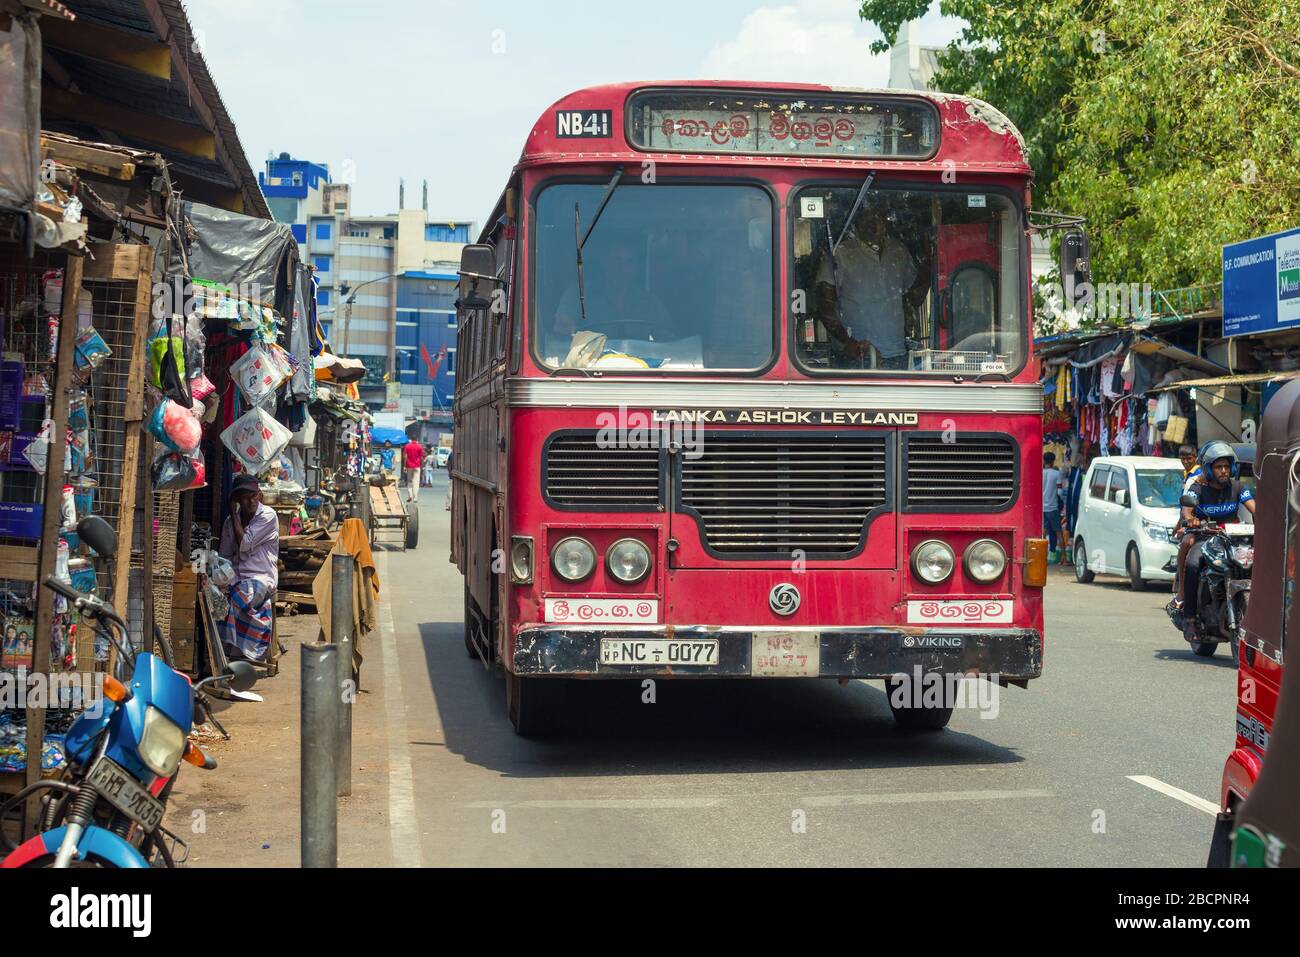 COLOMBO, SRI LANKA - FEBRUARY 23, 2020: Bus 'Lanka Ashok Leyland' close-up on a city street Stock Photo